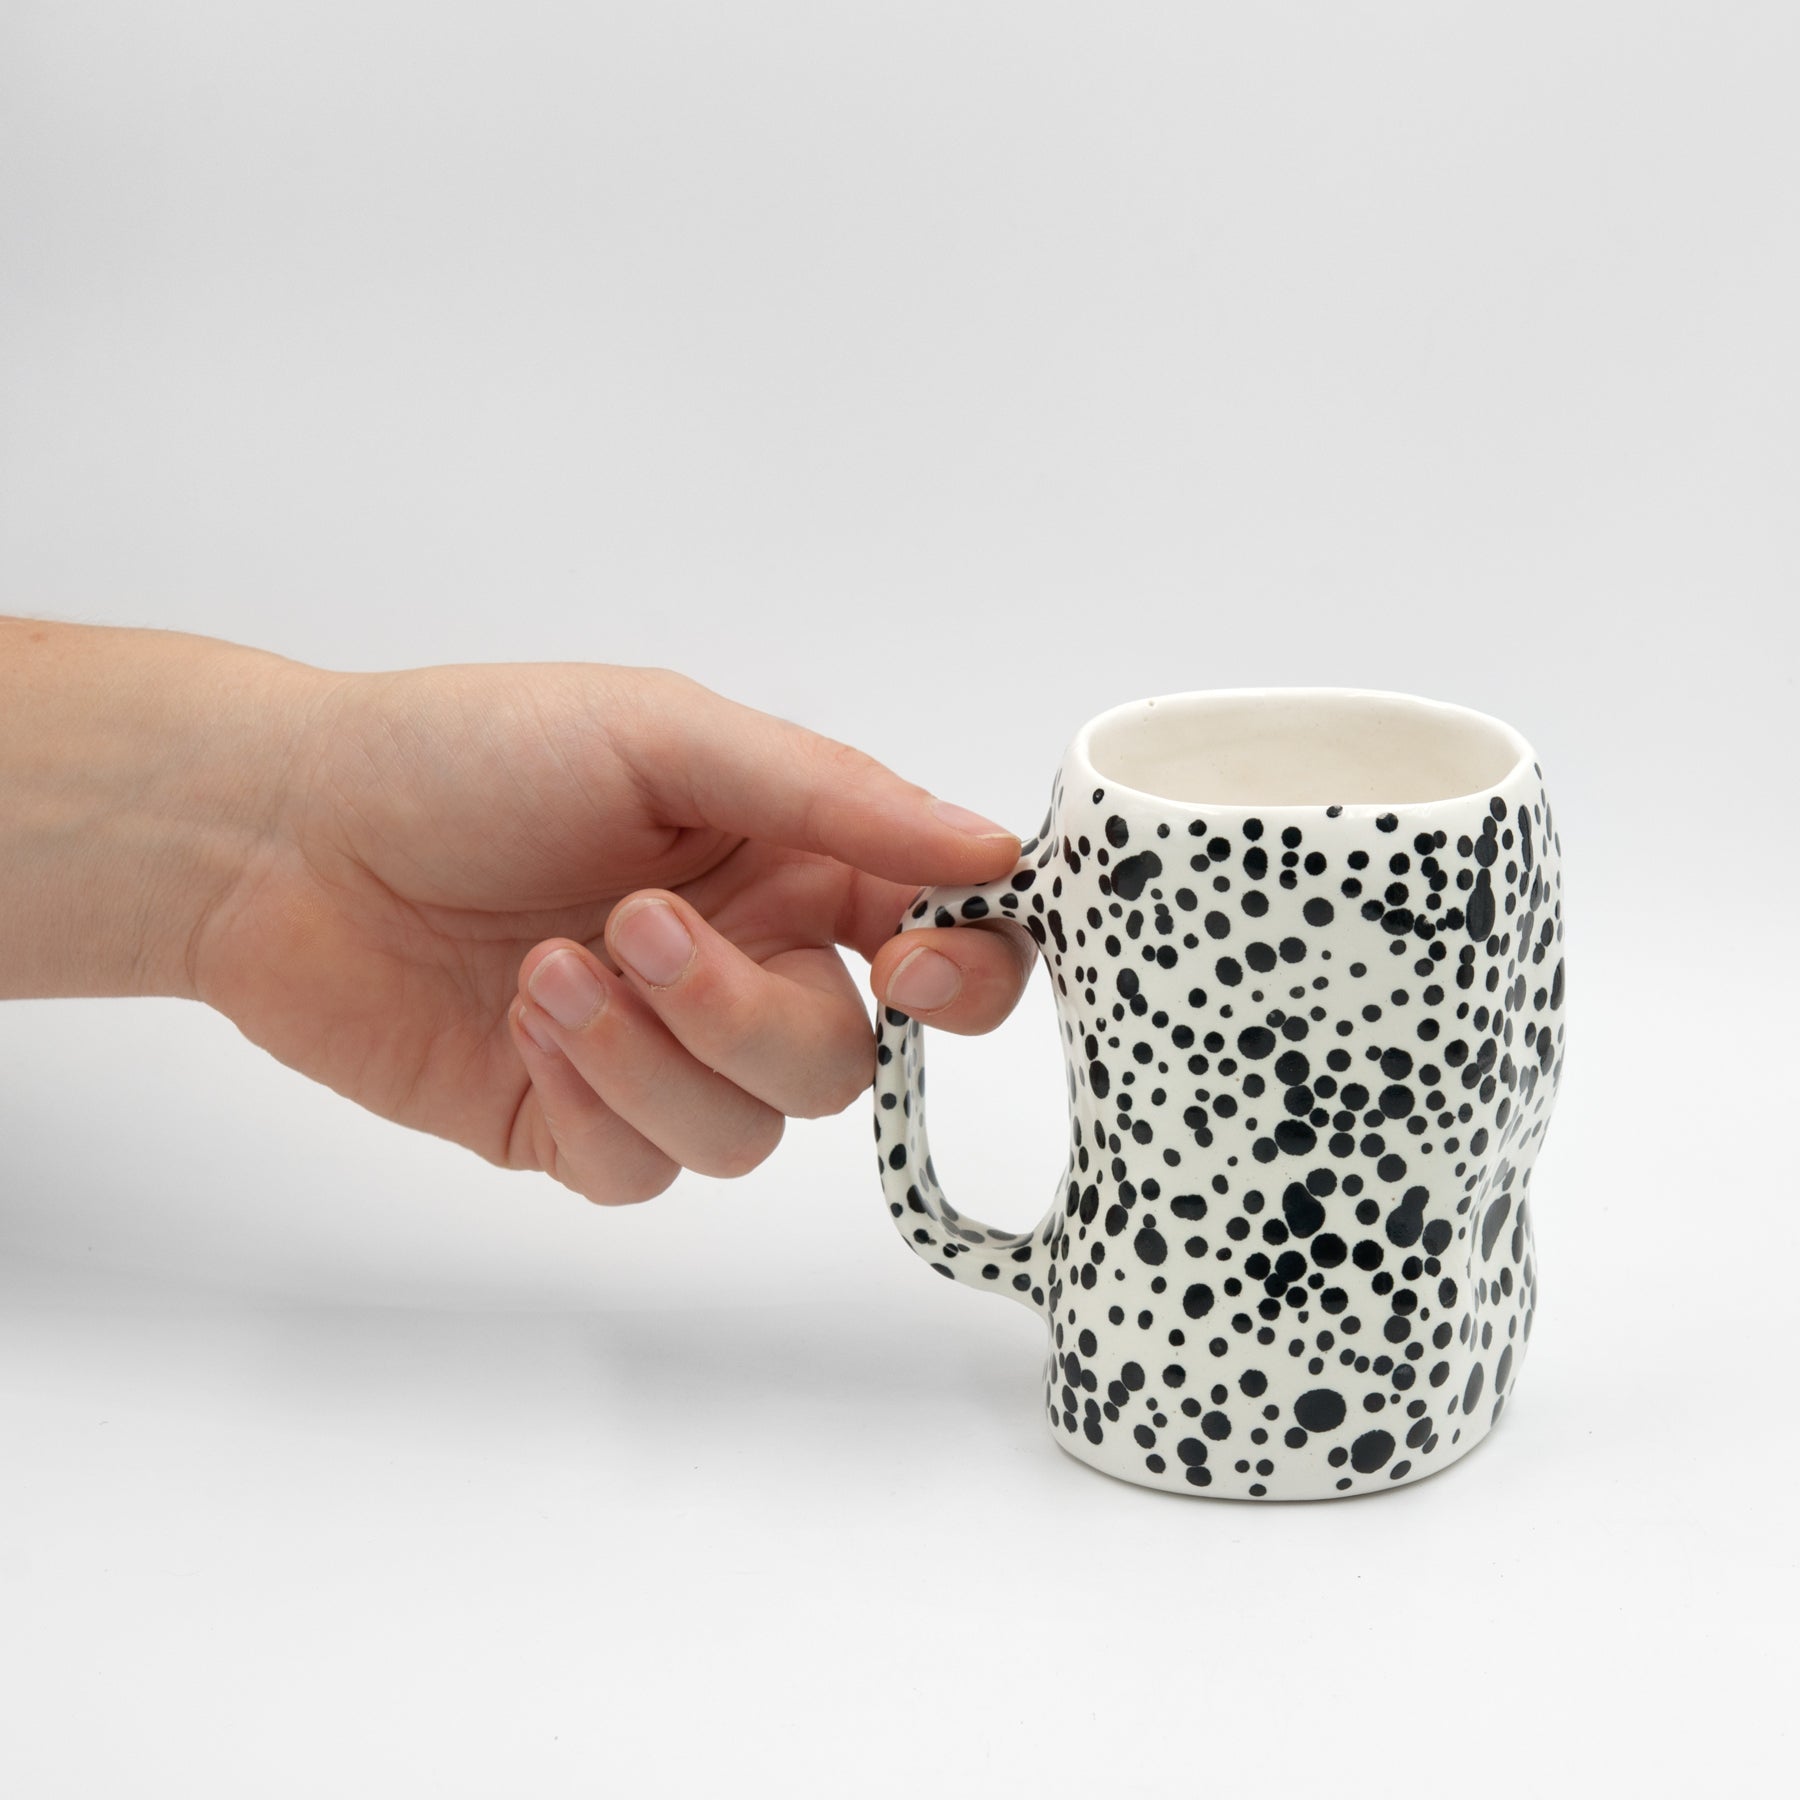 Pinched dotted mug